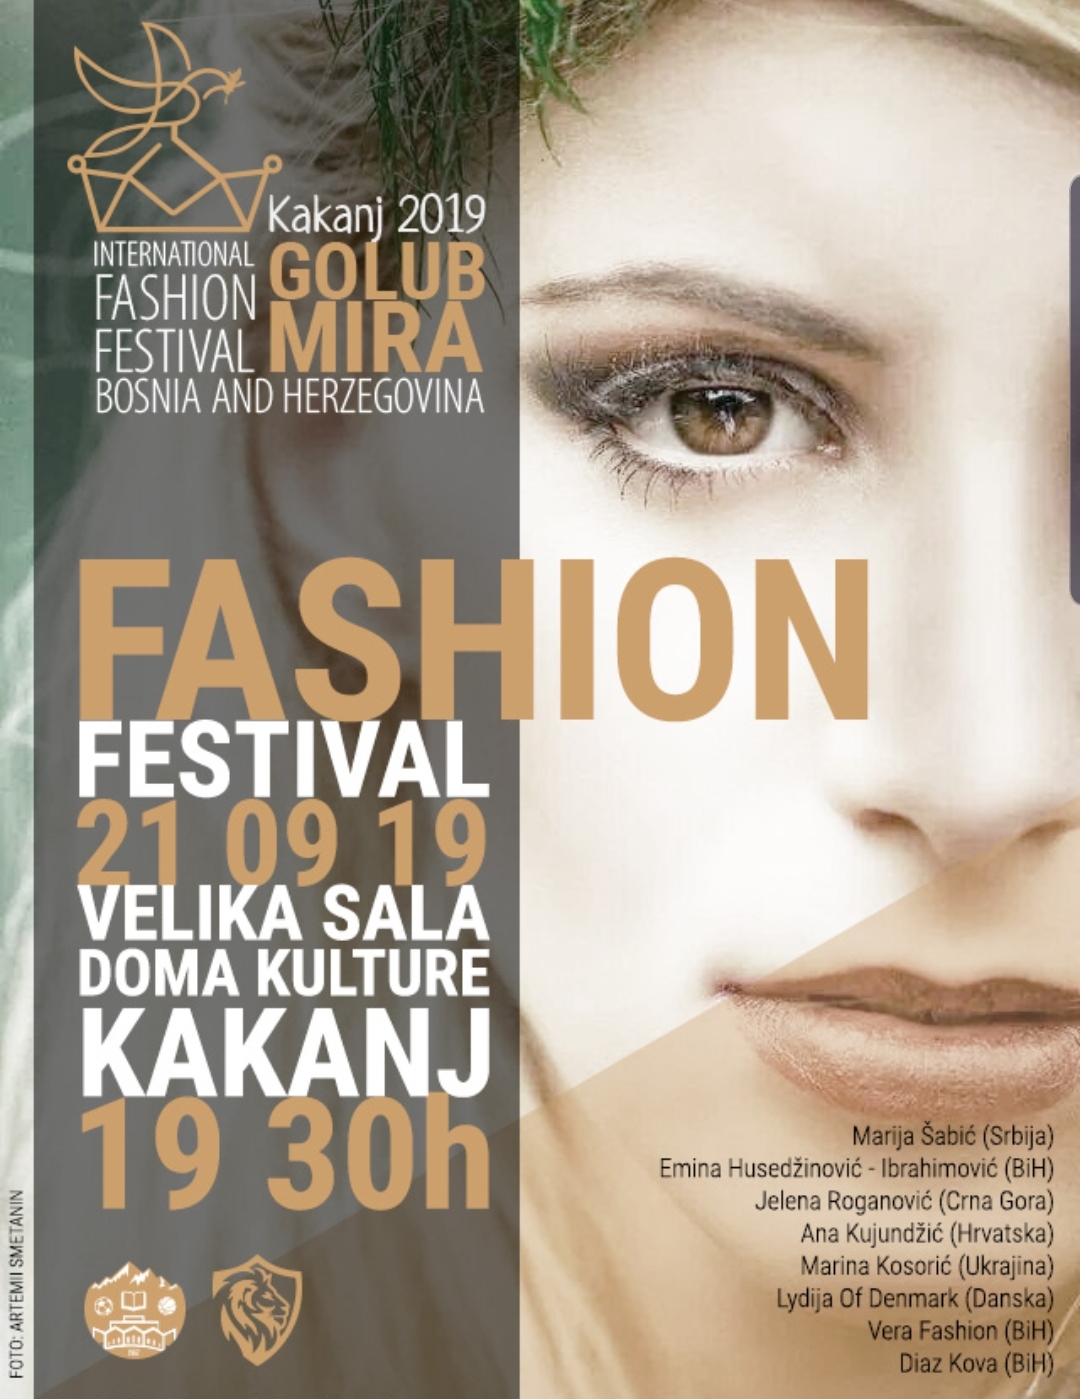 International Fashion Festival “Kakanj 2019” – Golub mira BiH